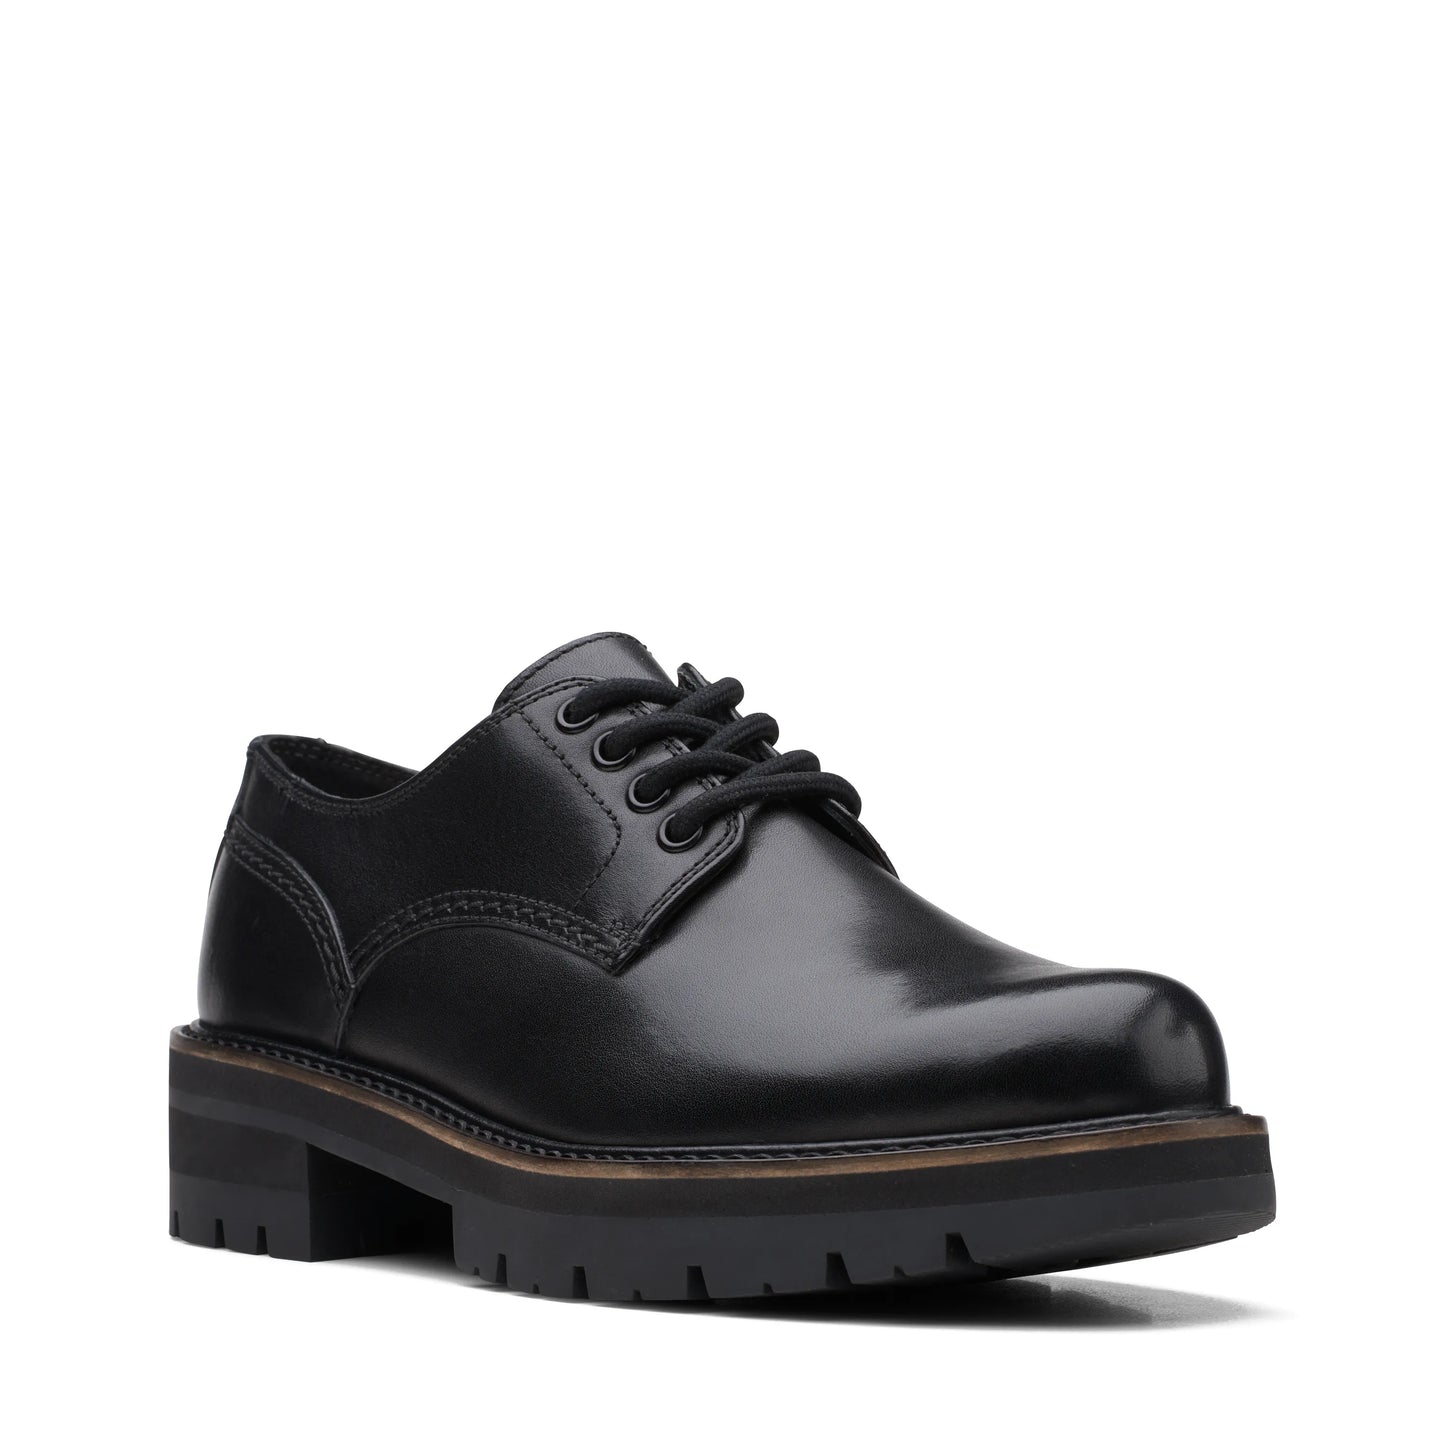 CLARKS | 여성을위한 더비 신발 | ORIANNA DERBY BLACK | 검은색